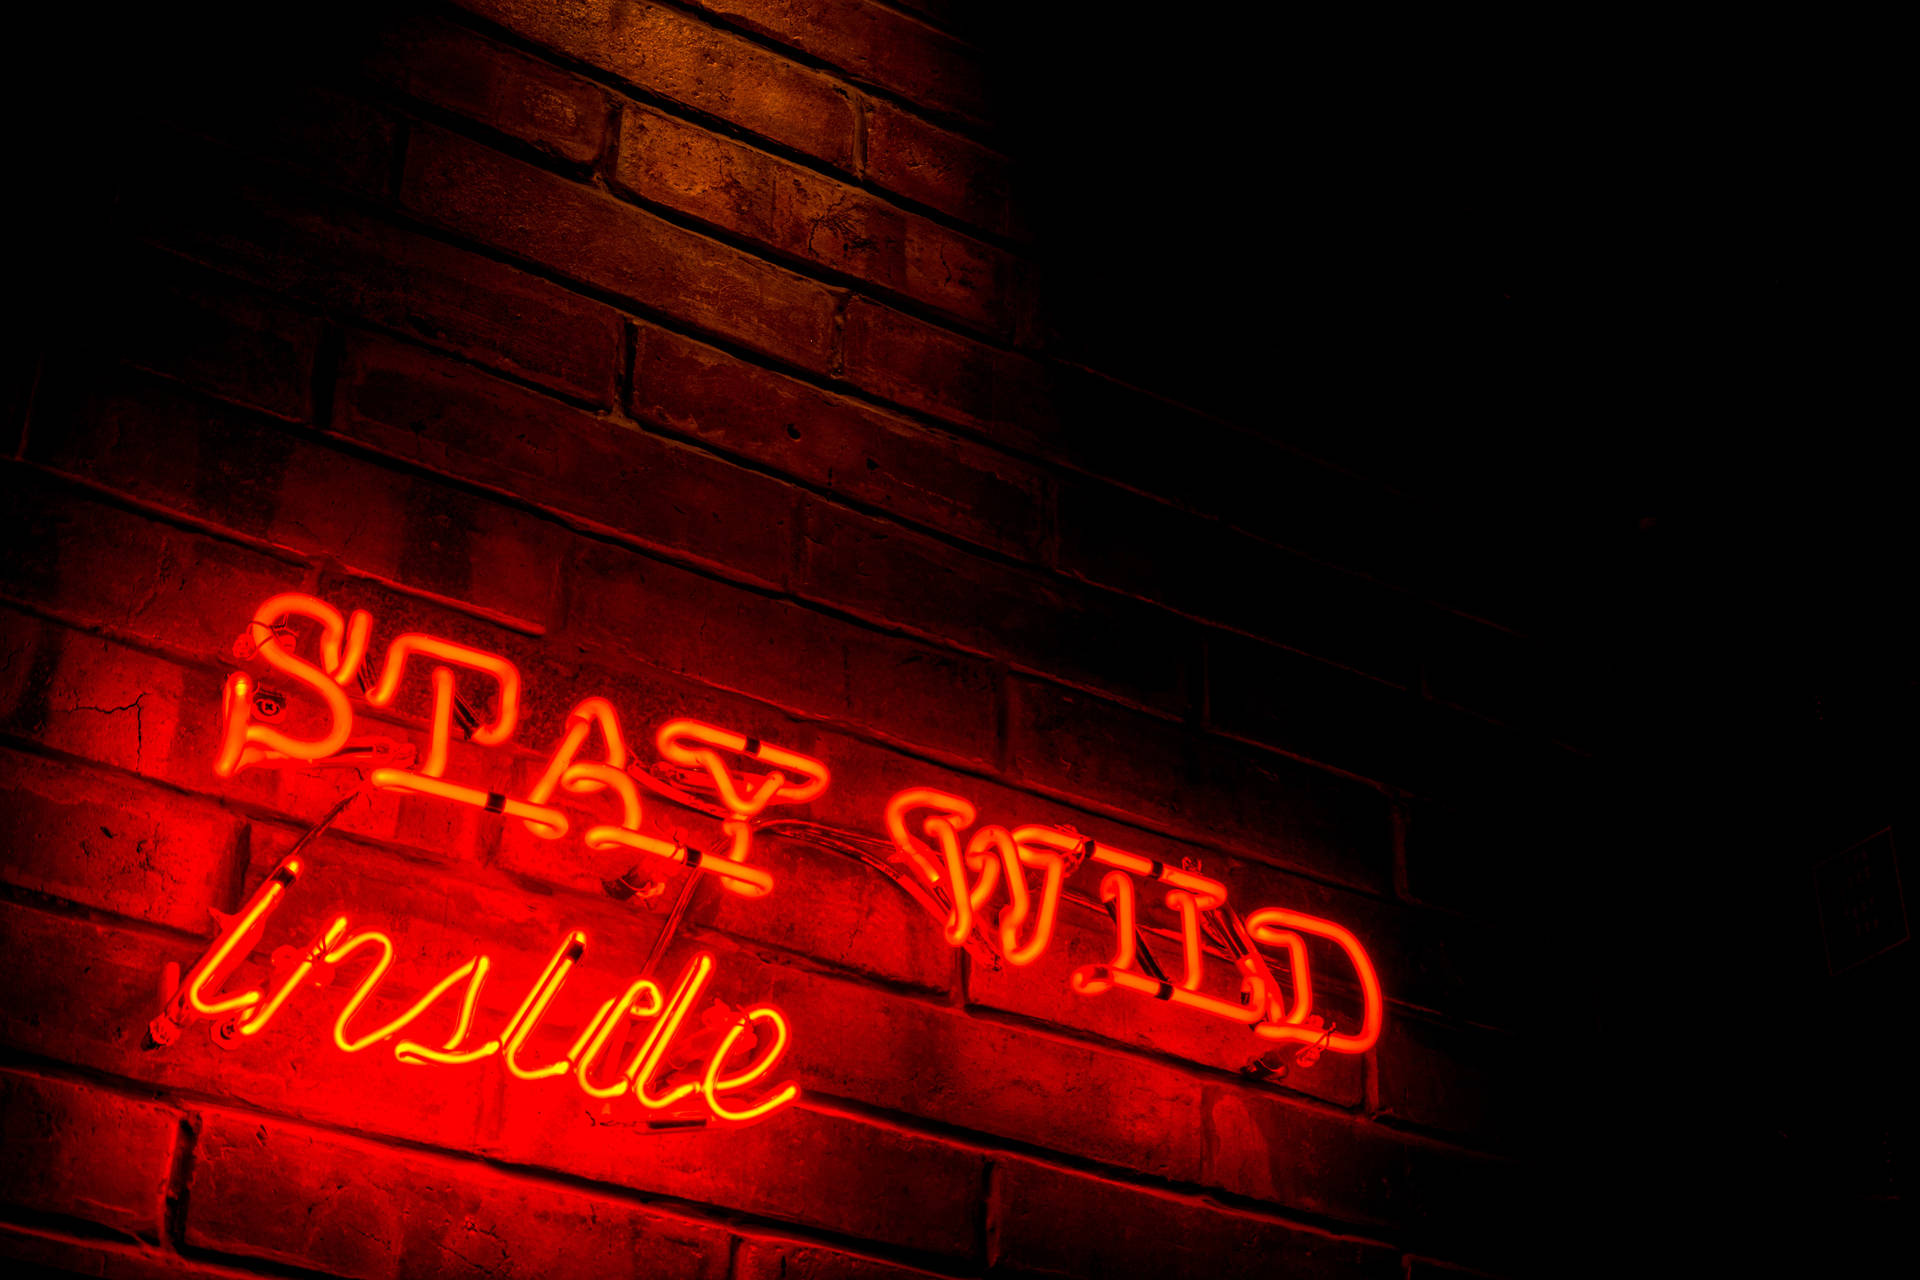 Stay Wild Inside Neon Sign Wallpaper